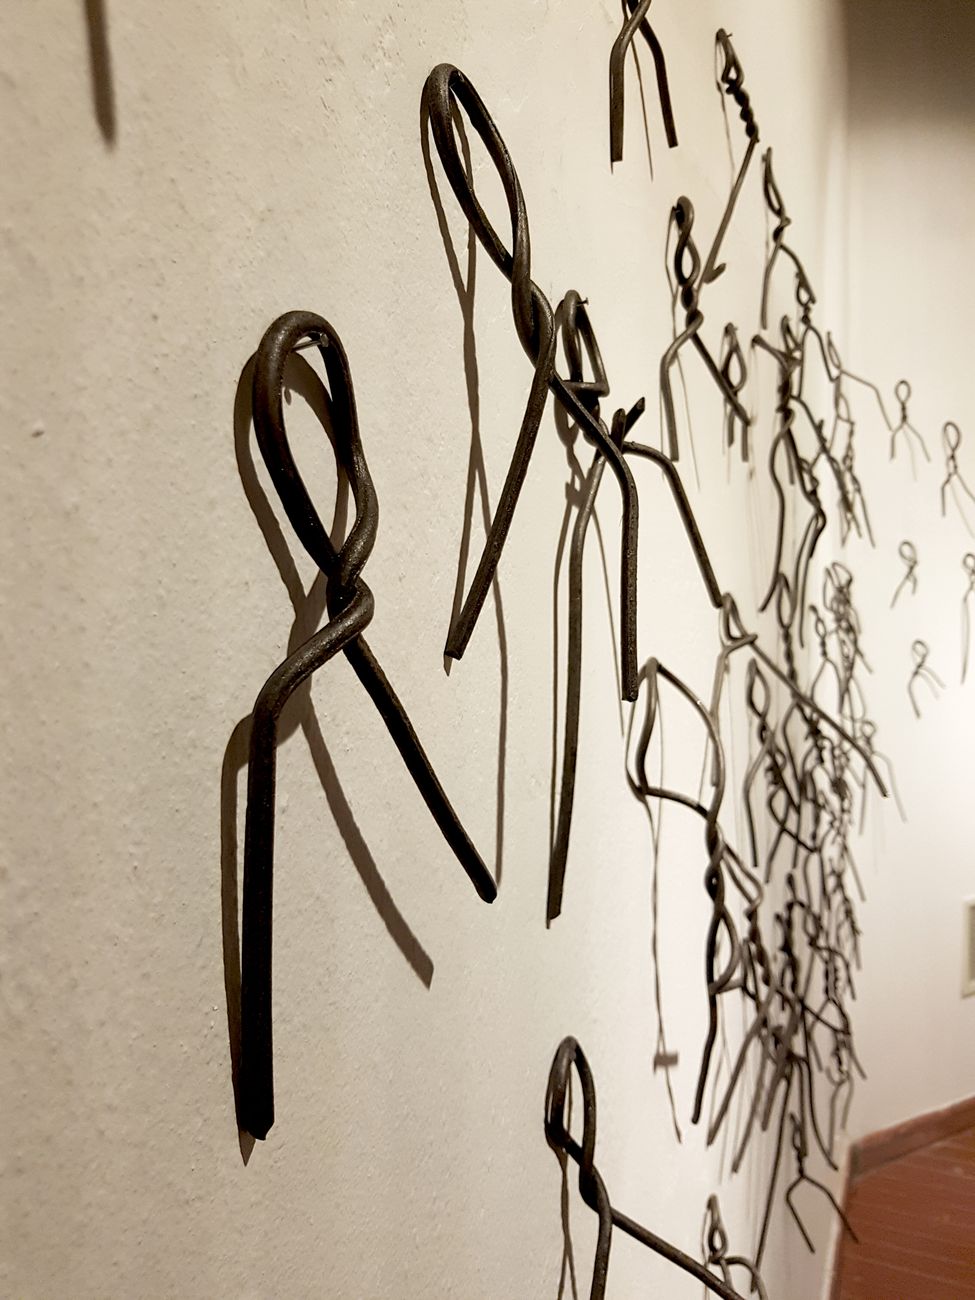 Jano Sicura, Màtaksa, exhibition view at MAON, Rende 2018